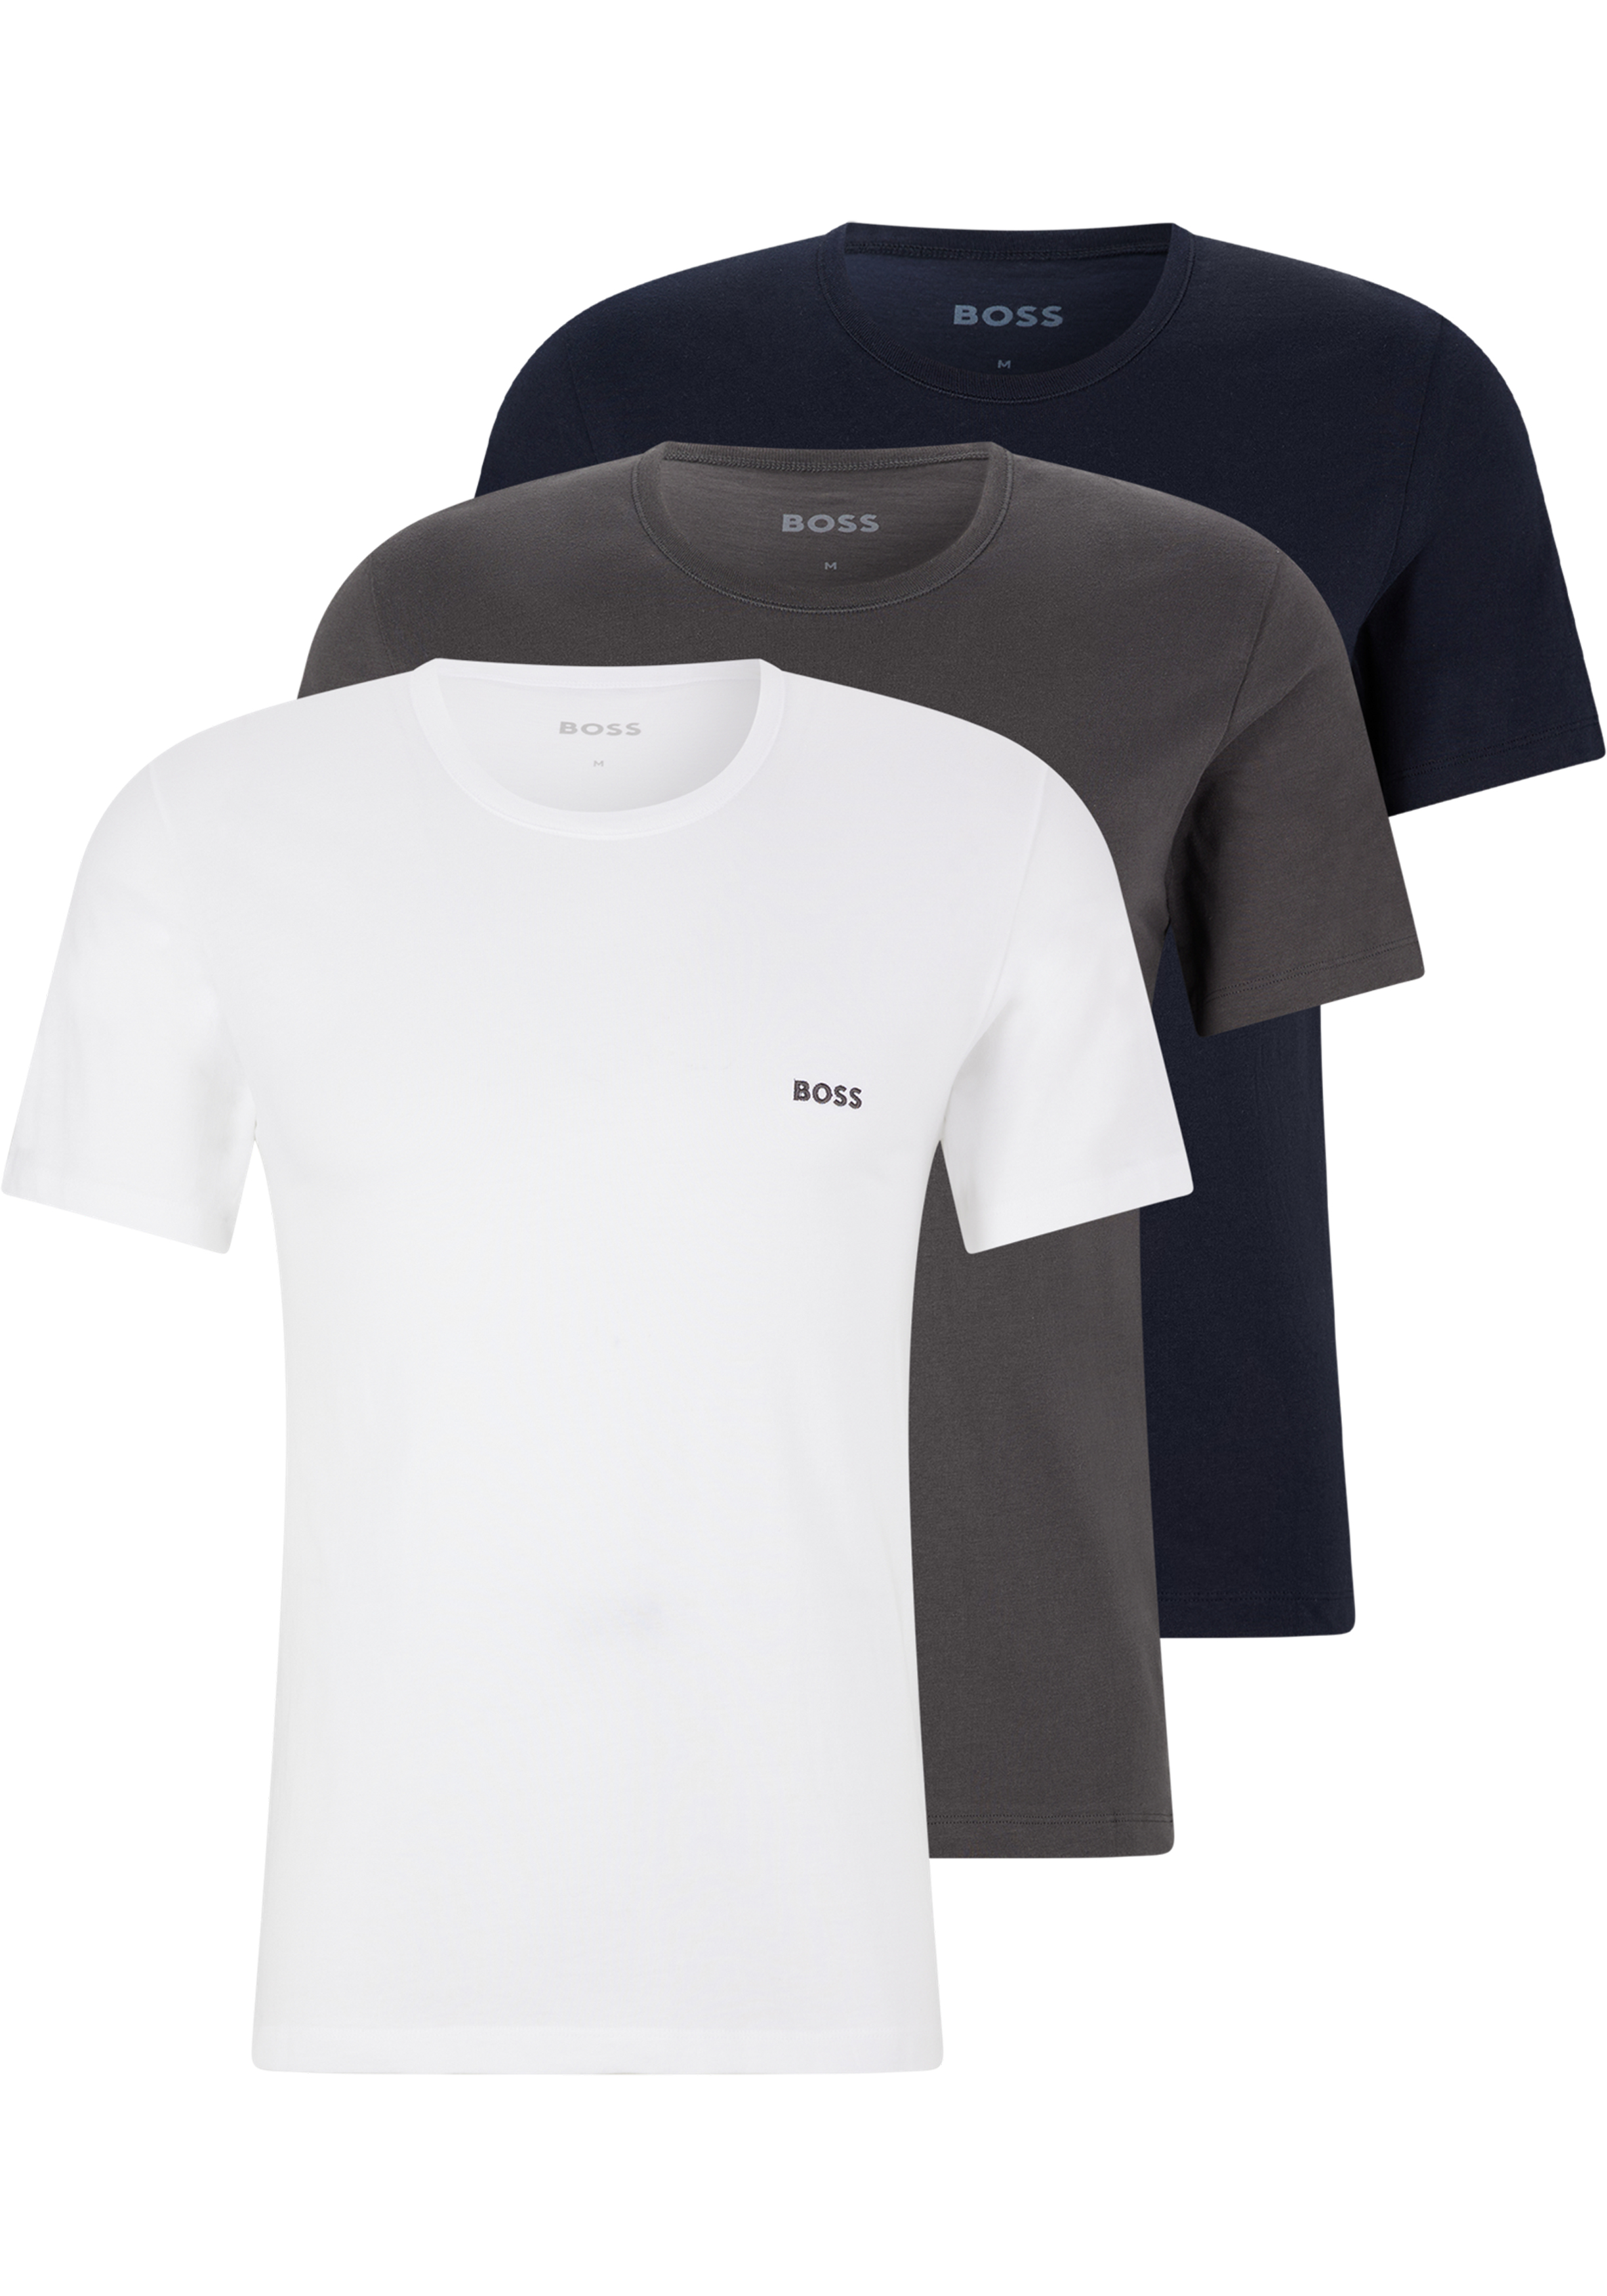 Atticus Snor ledematen HUGO BOSS Classic T-shirts regular fit (3-pack), heren T-shirts O-hals,...  - Zomer SALE tot 50% korting